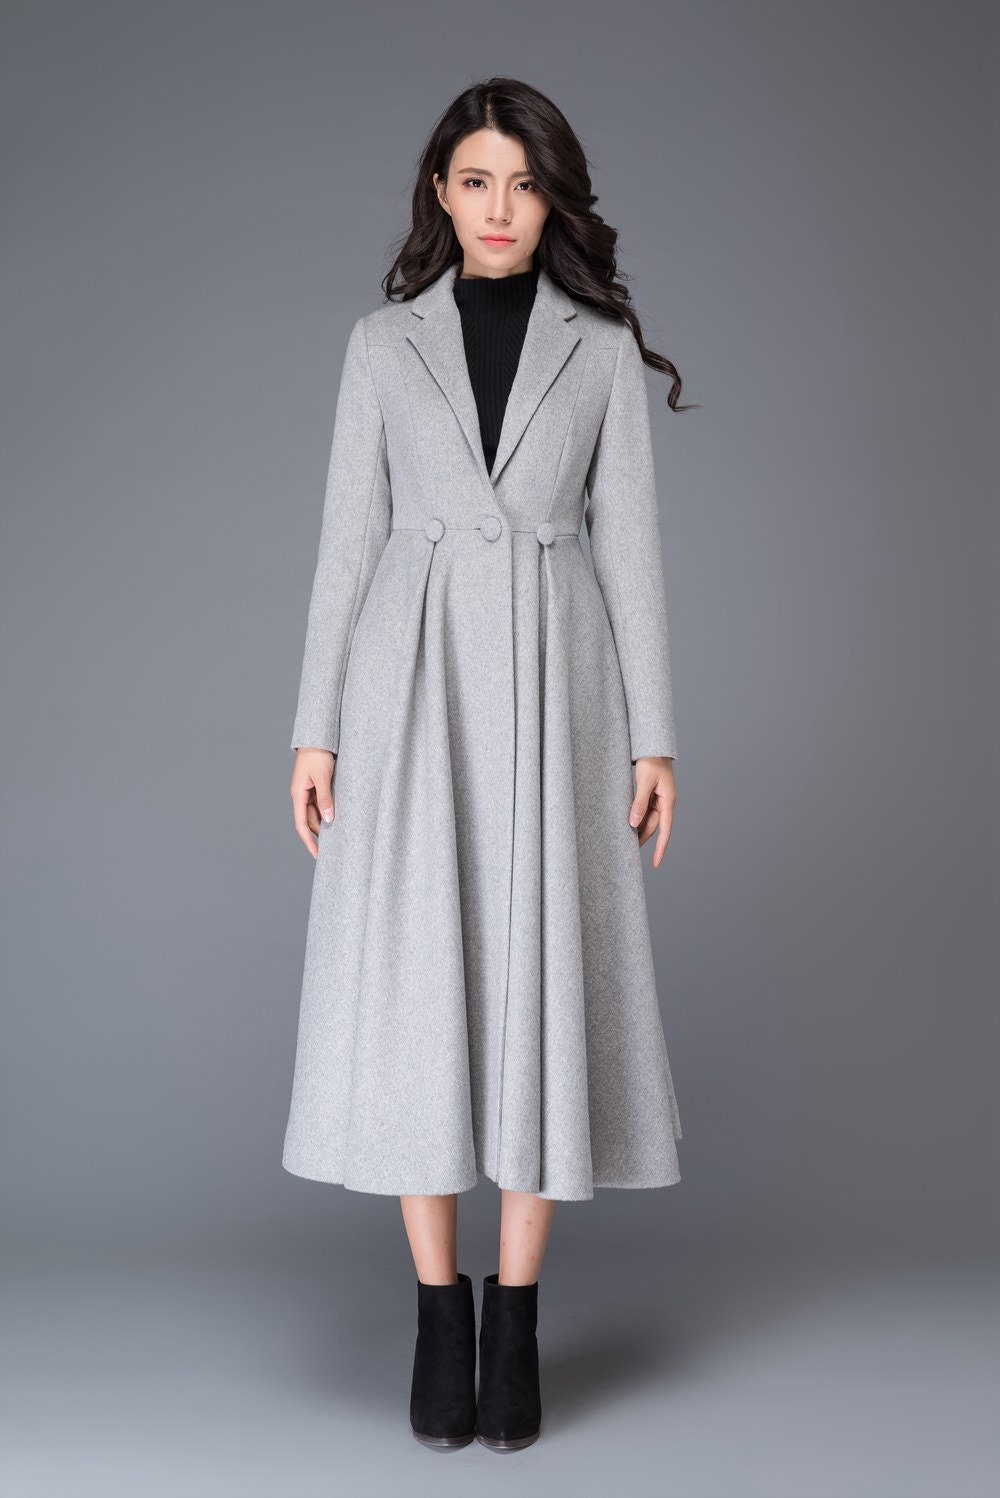 Long Wool Princess Coat Swing wool Coat Fit &Flare Coat | Etsy